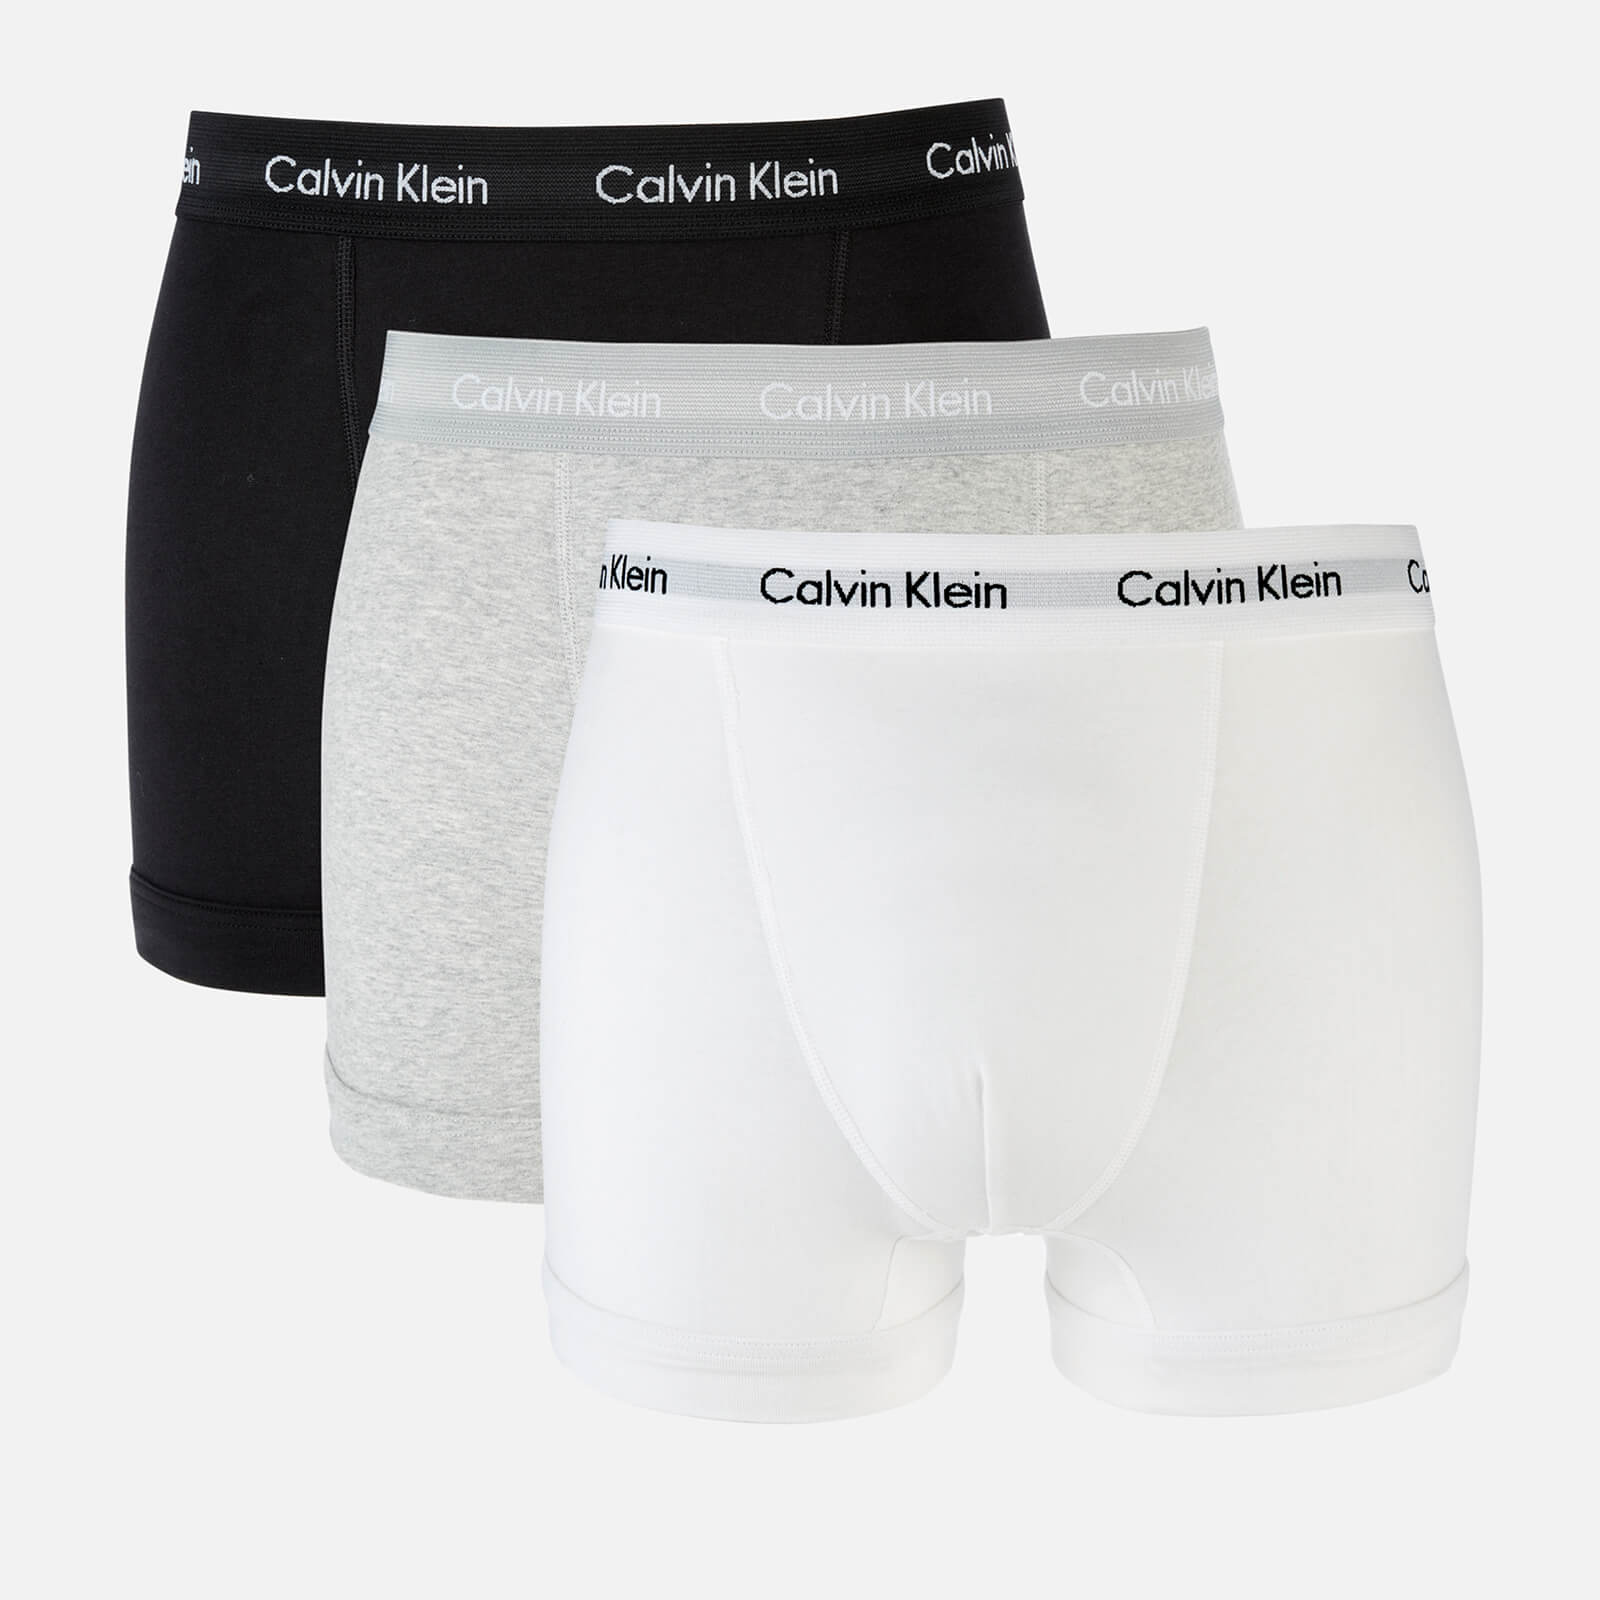 Calvin Klein Men's 3 Pack Trunk Boxers Big & Tall - Black/White/Grey Heather - 4XL